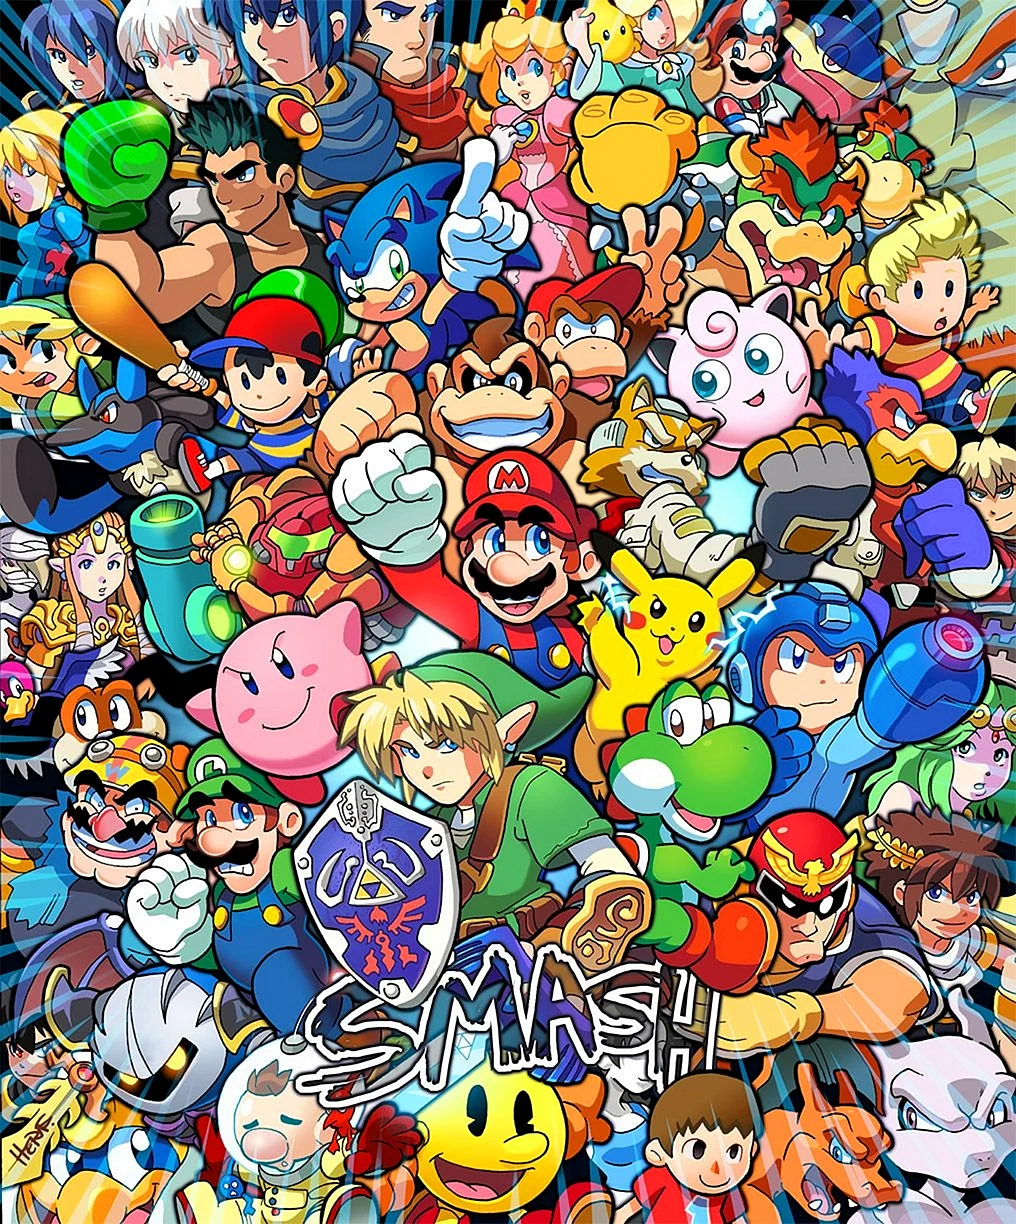 Super Smash Bros Ultimate Wallpaper